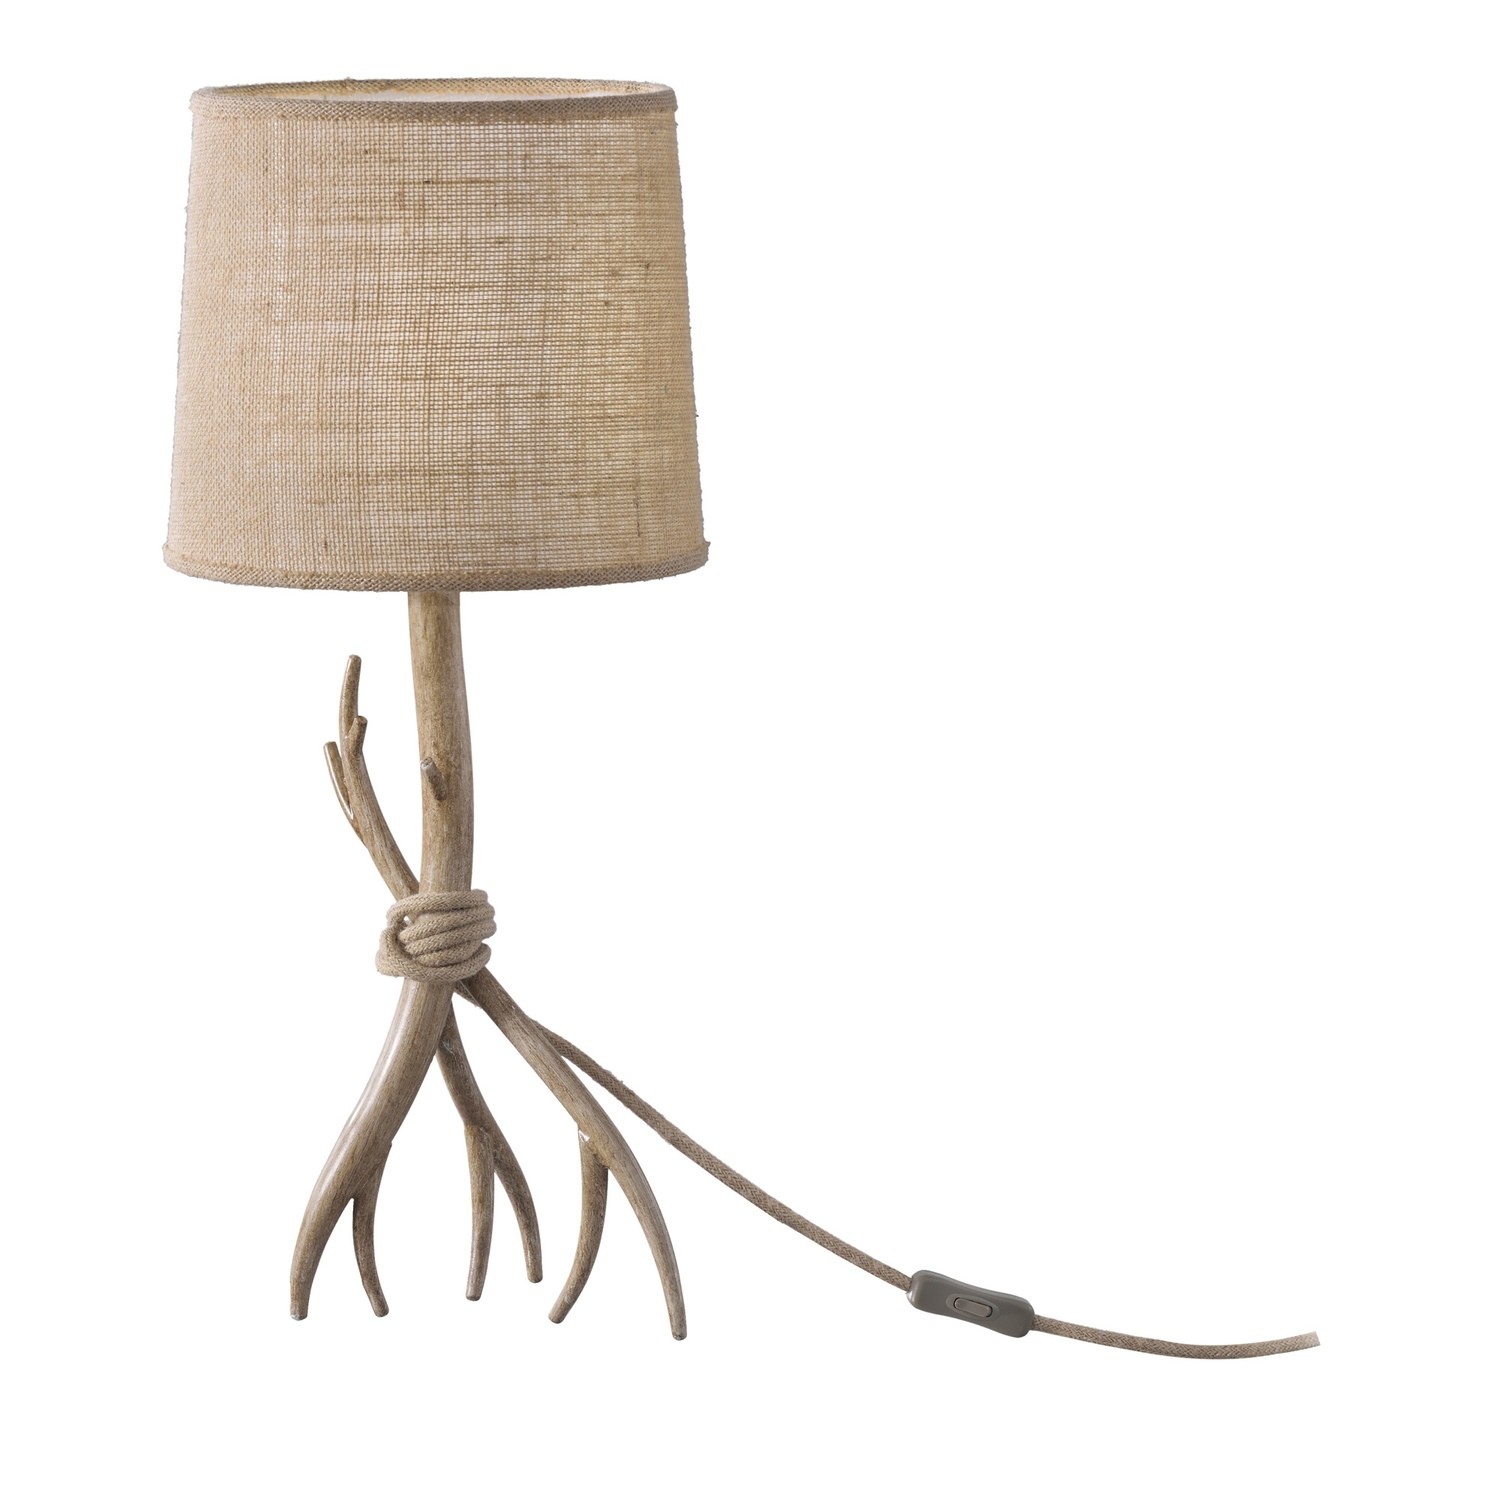 Sabina Table Lamp 57cm, 1 x E27 (Max 40W), Imitation Wood, Linen Shade.